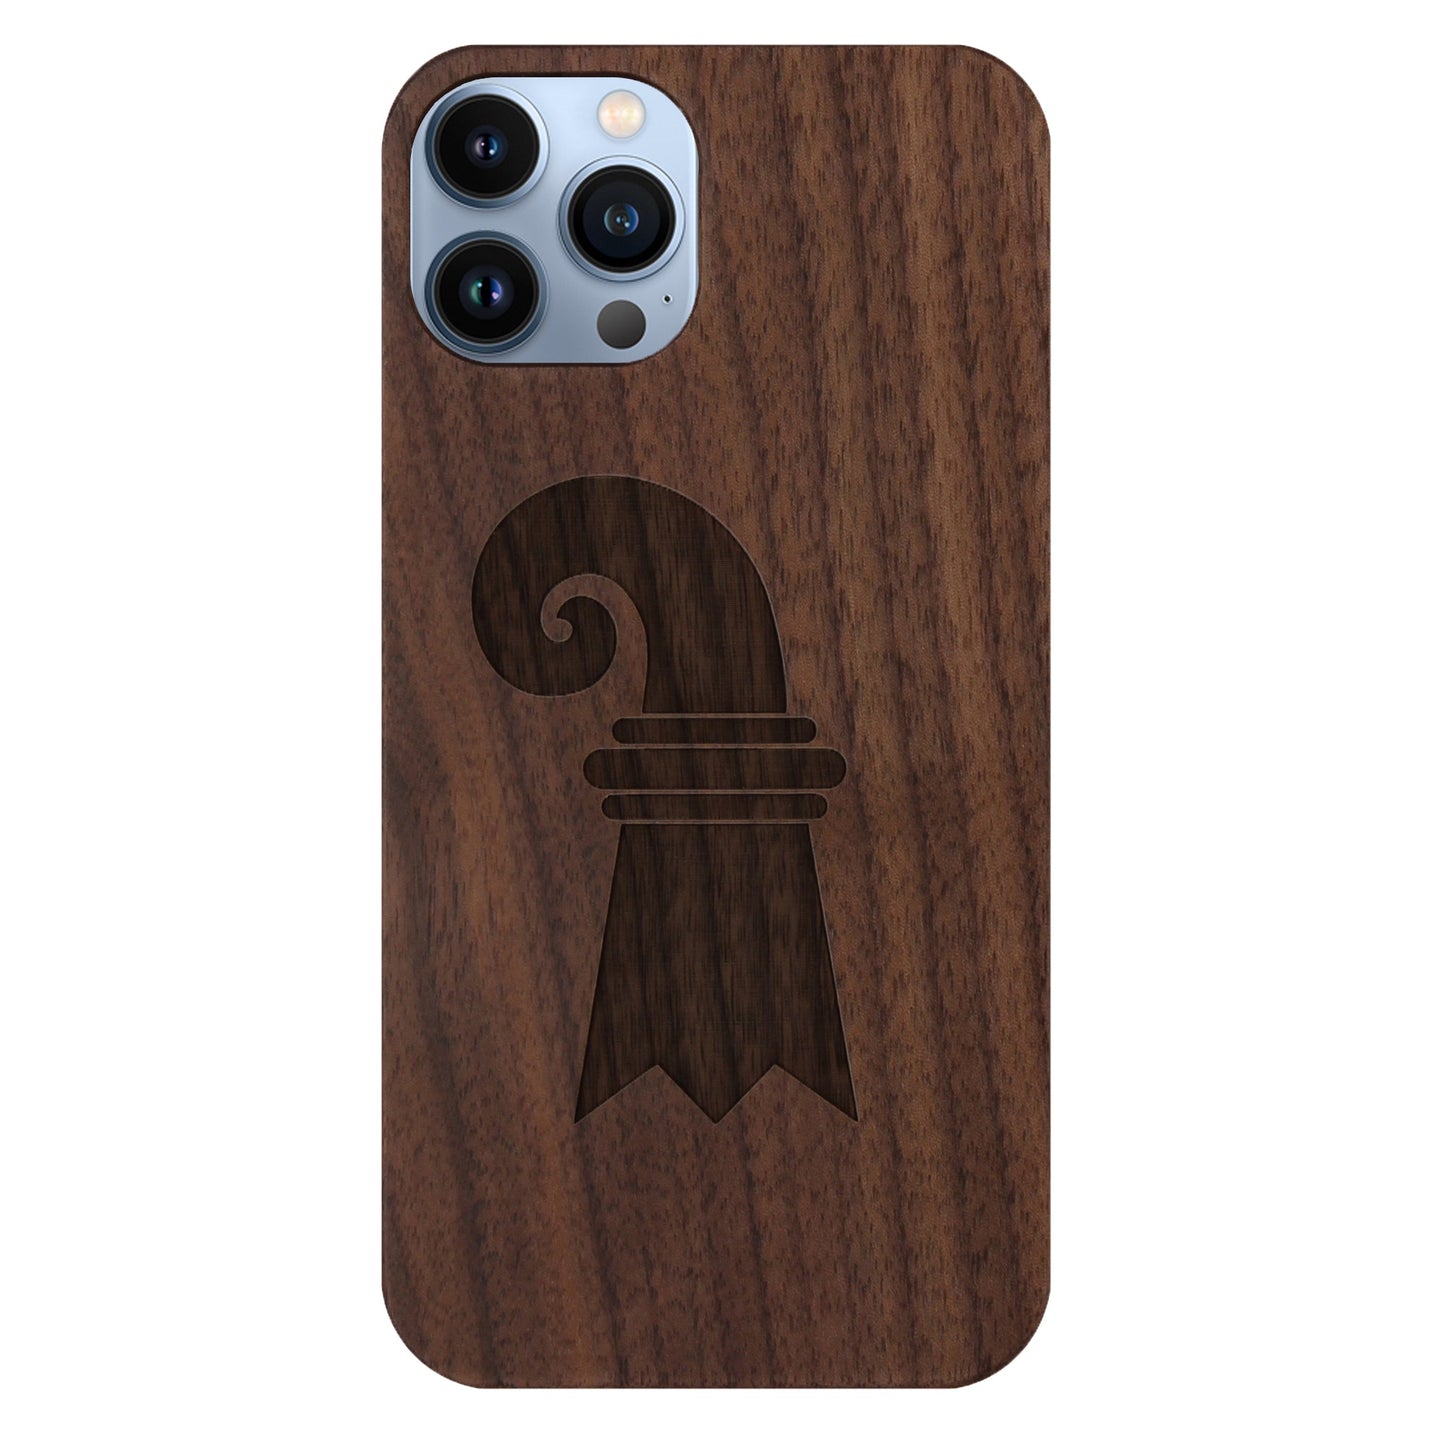 Baslerstab Eden case made of walnut wood for iPhone 13 Pro Max